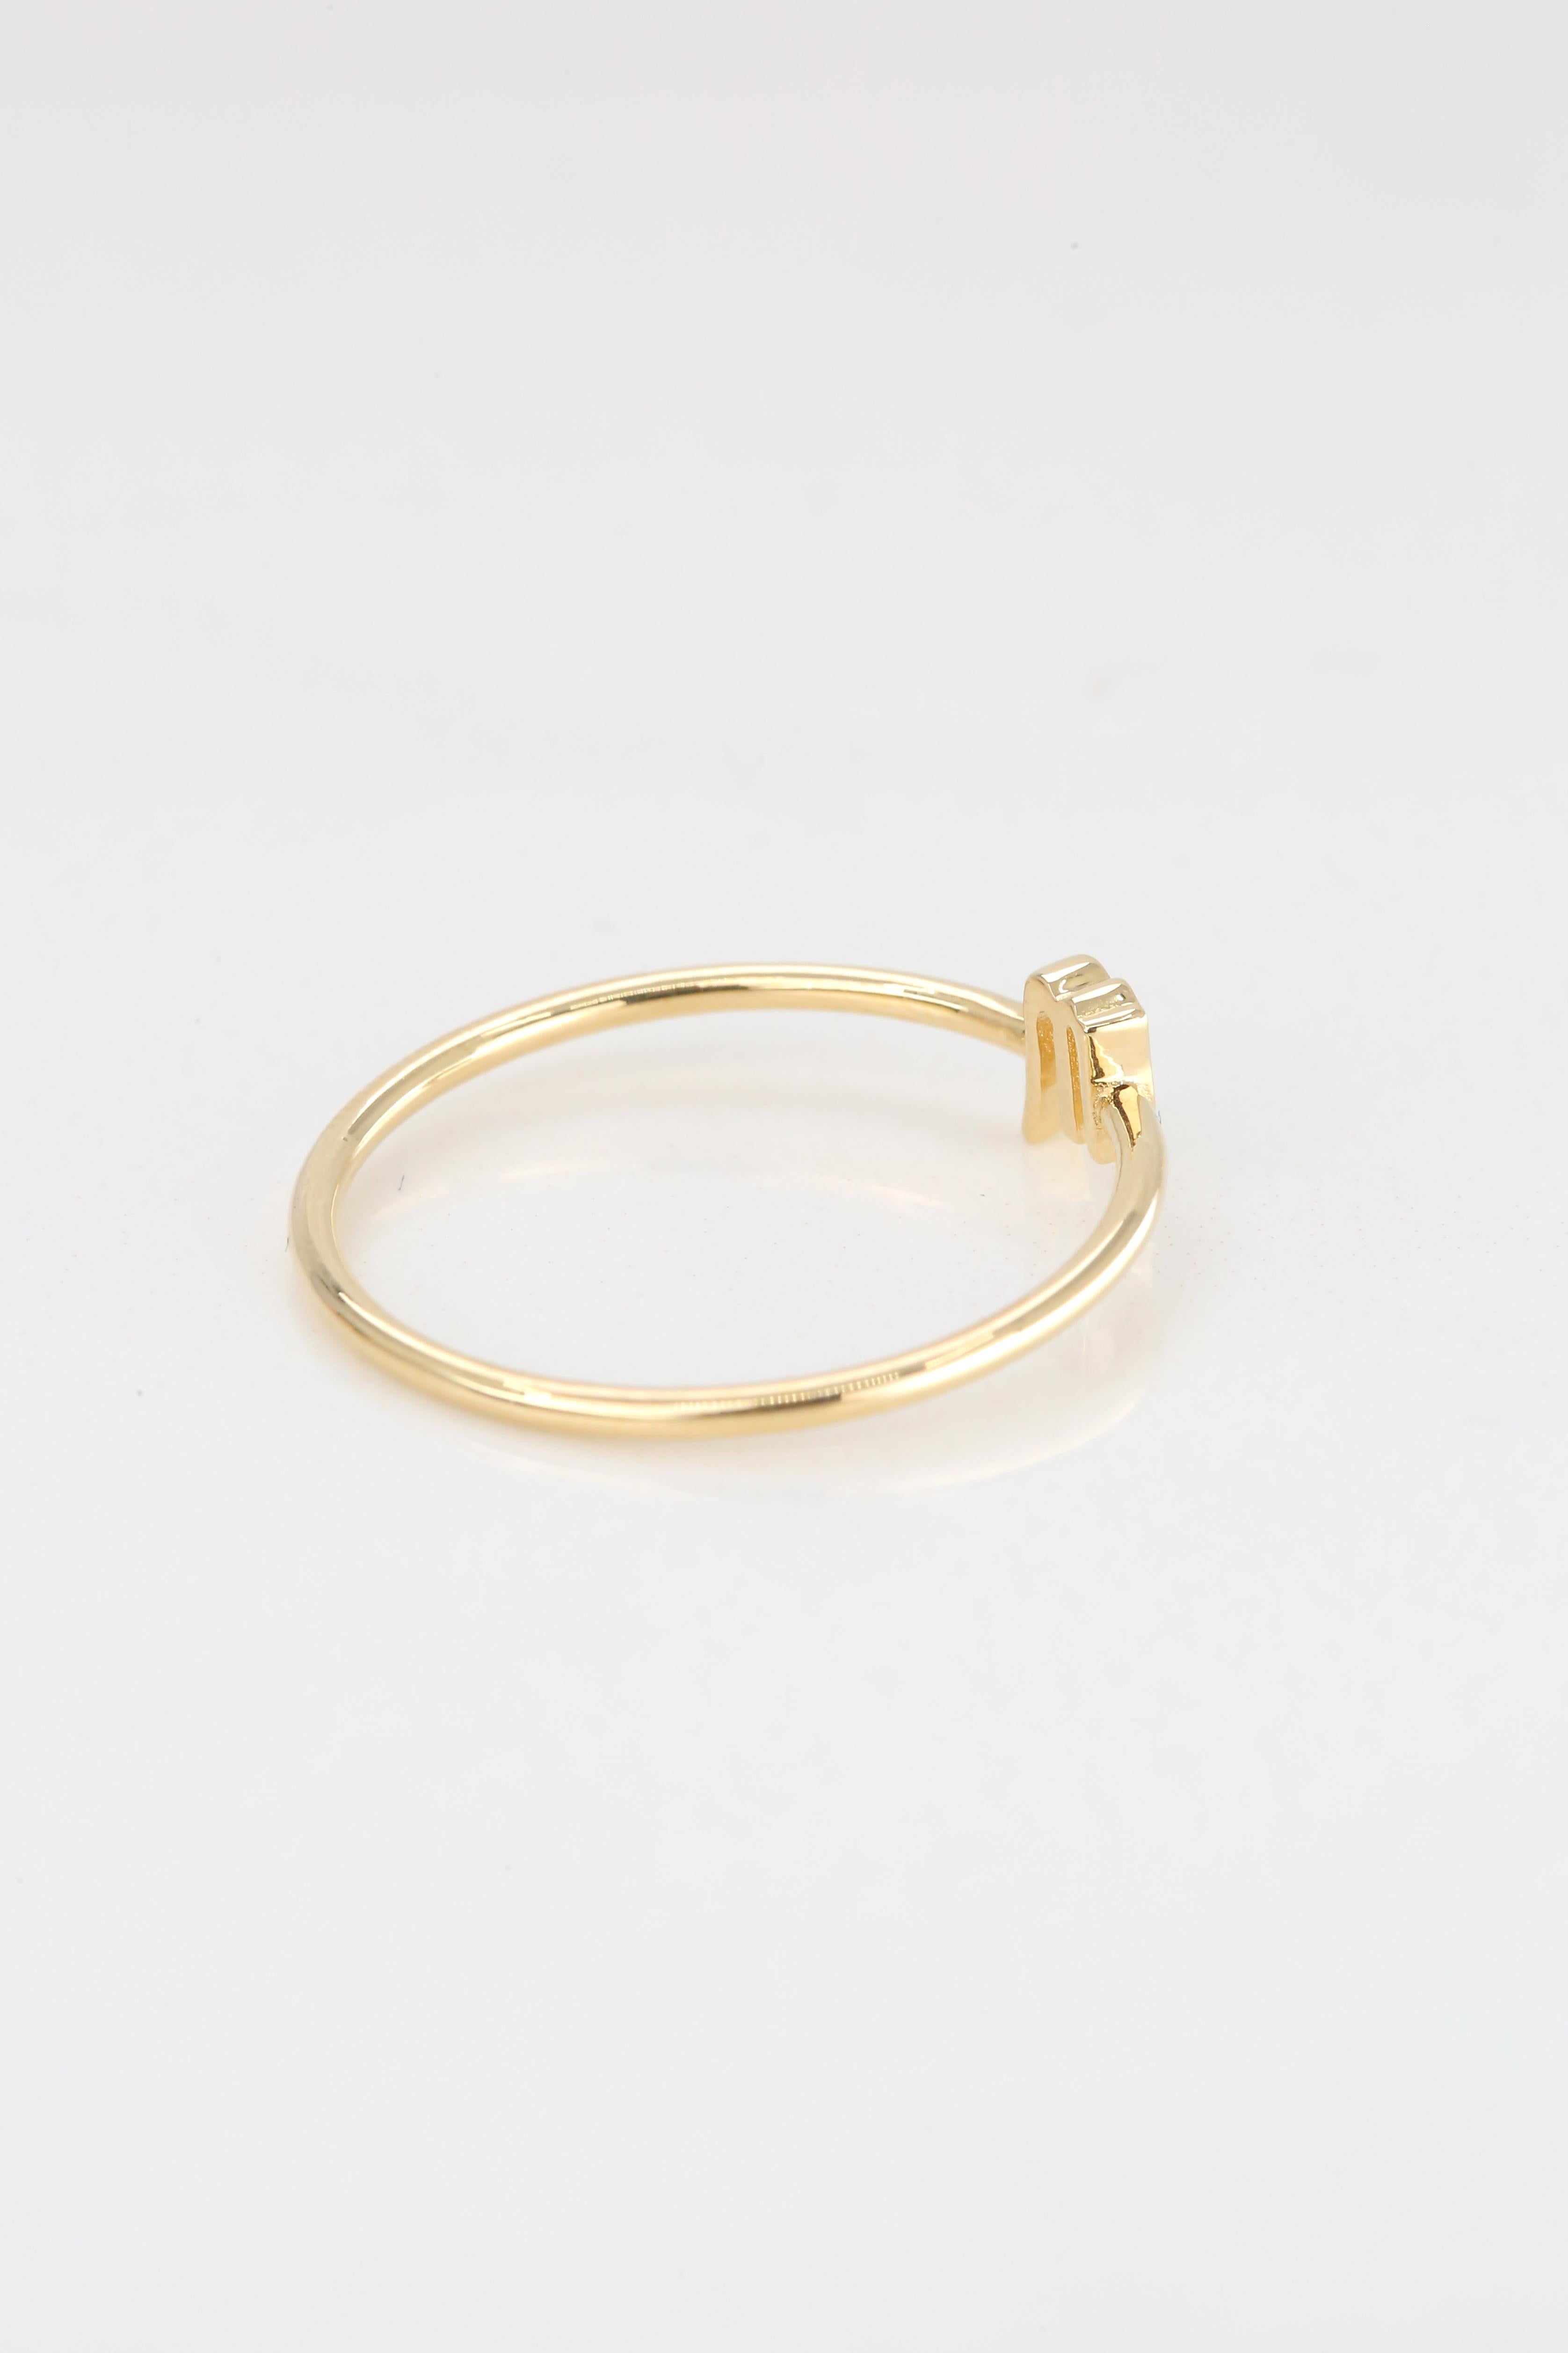 For Sale:  14K Gold Scorpio Ring, Scorpio Sign Gold Ring 7